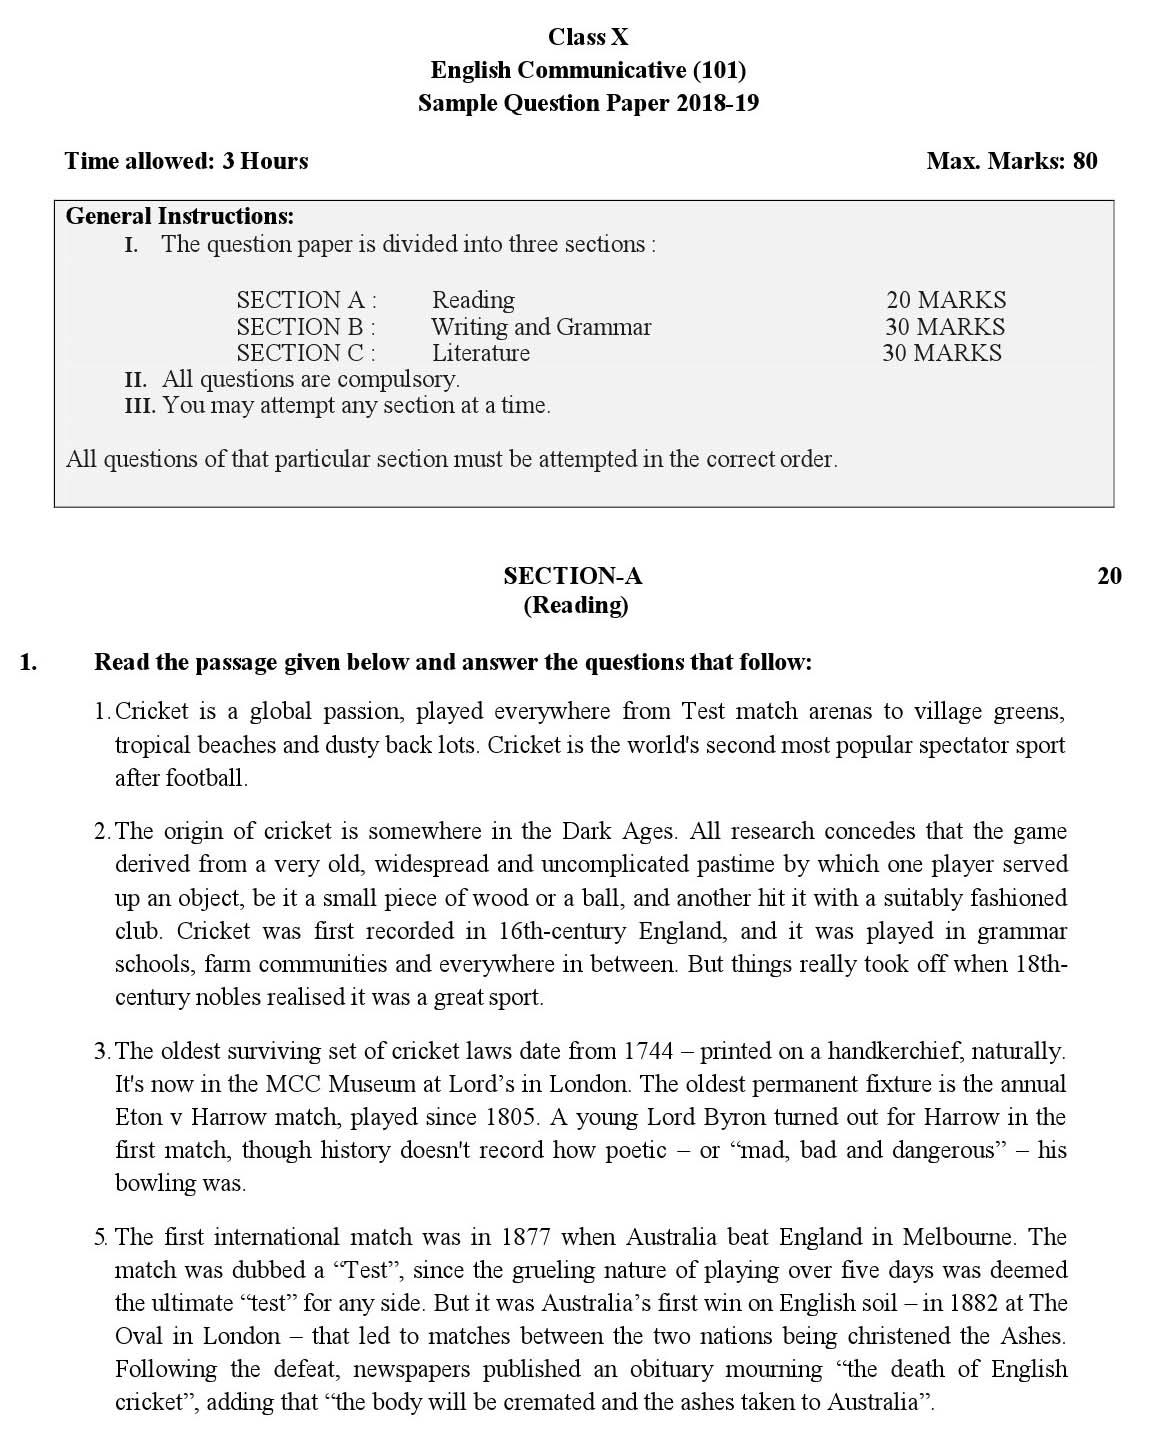 English Communicative CBSE Class X Sample Question Paper 2018 19 - Image 1